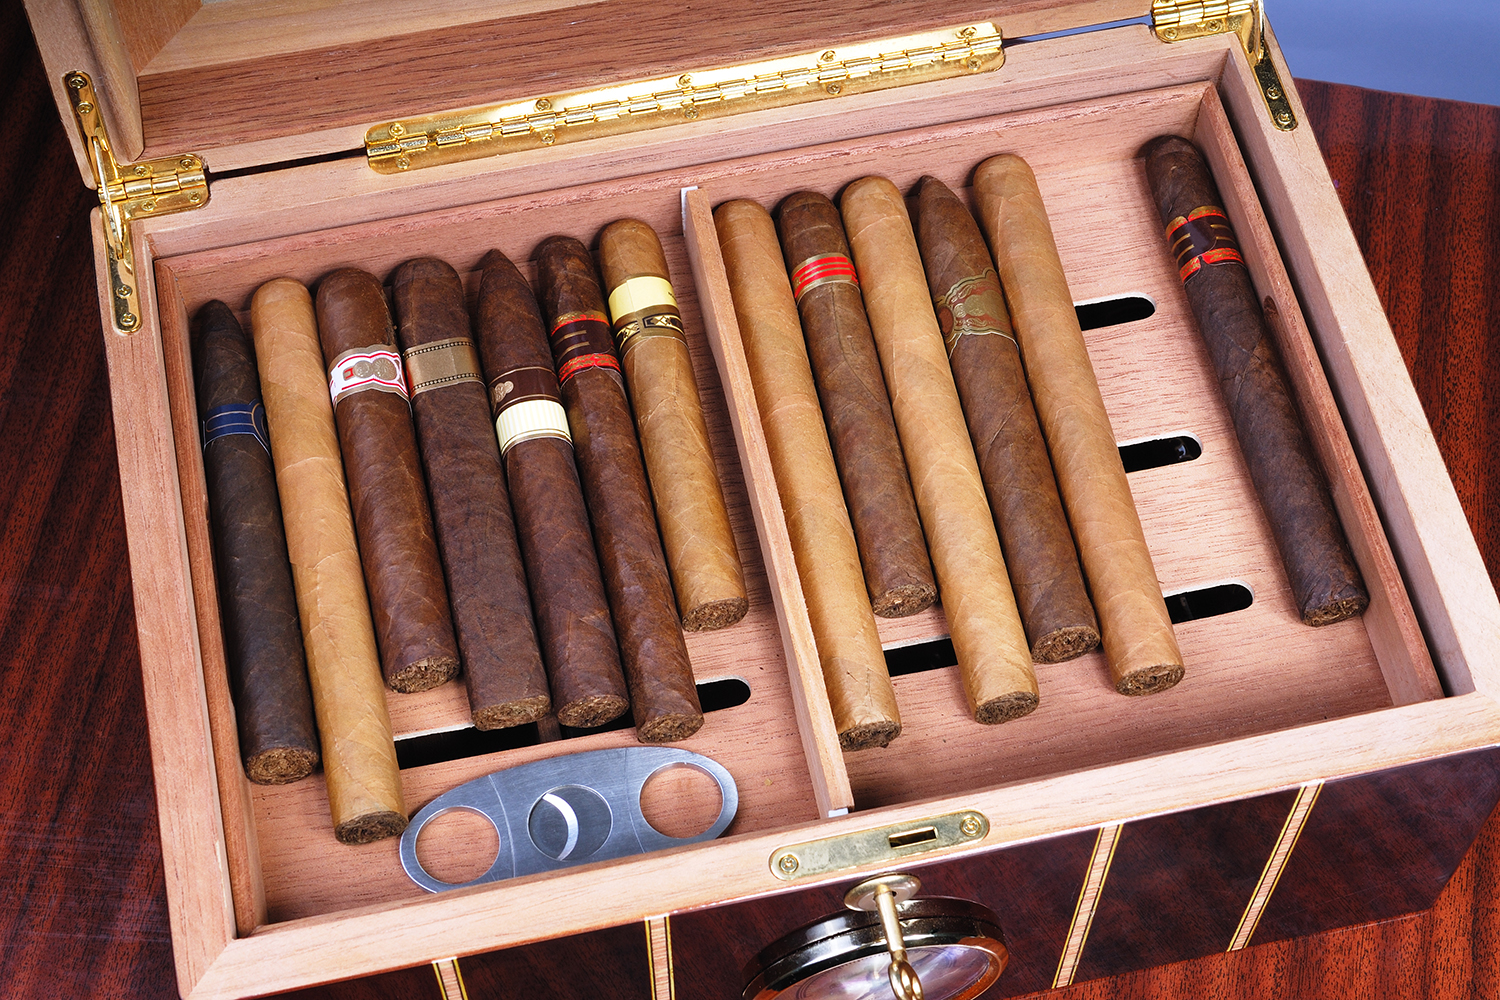 A cigar humidifier full of cigars.